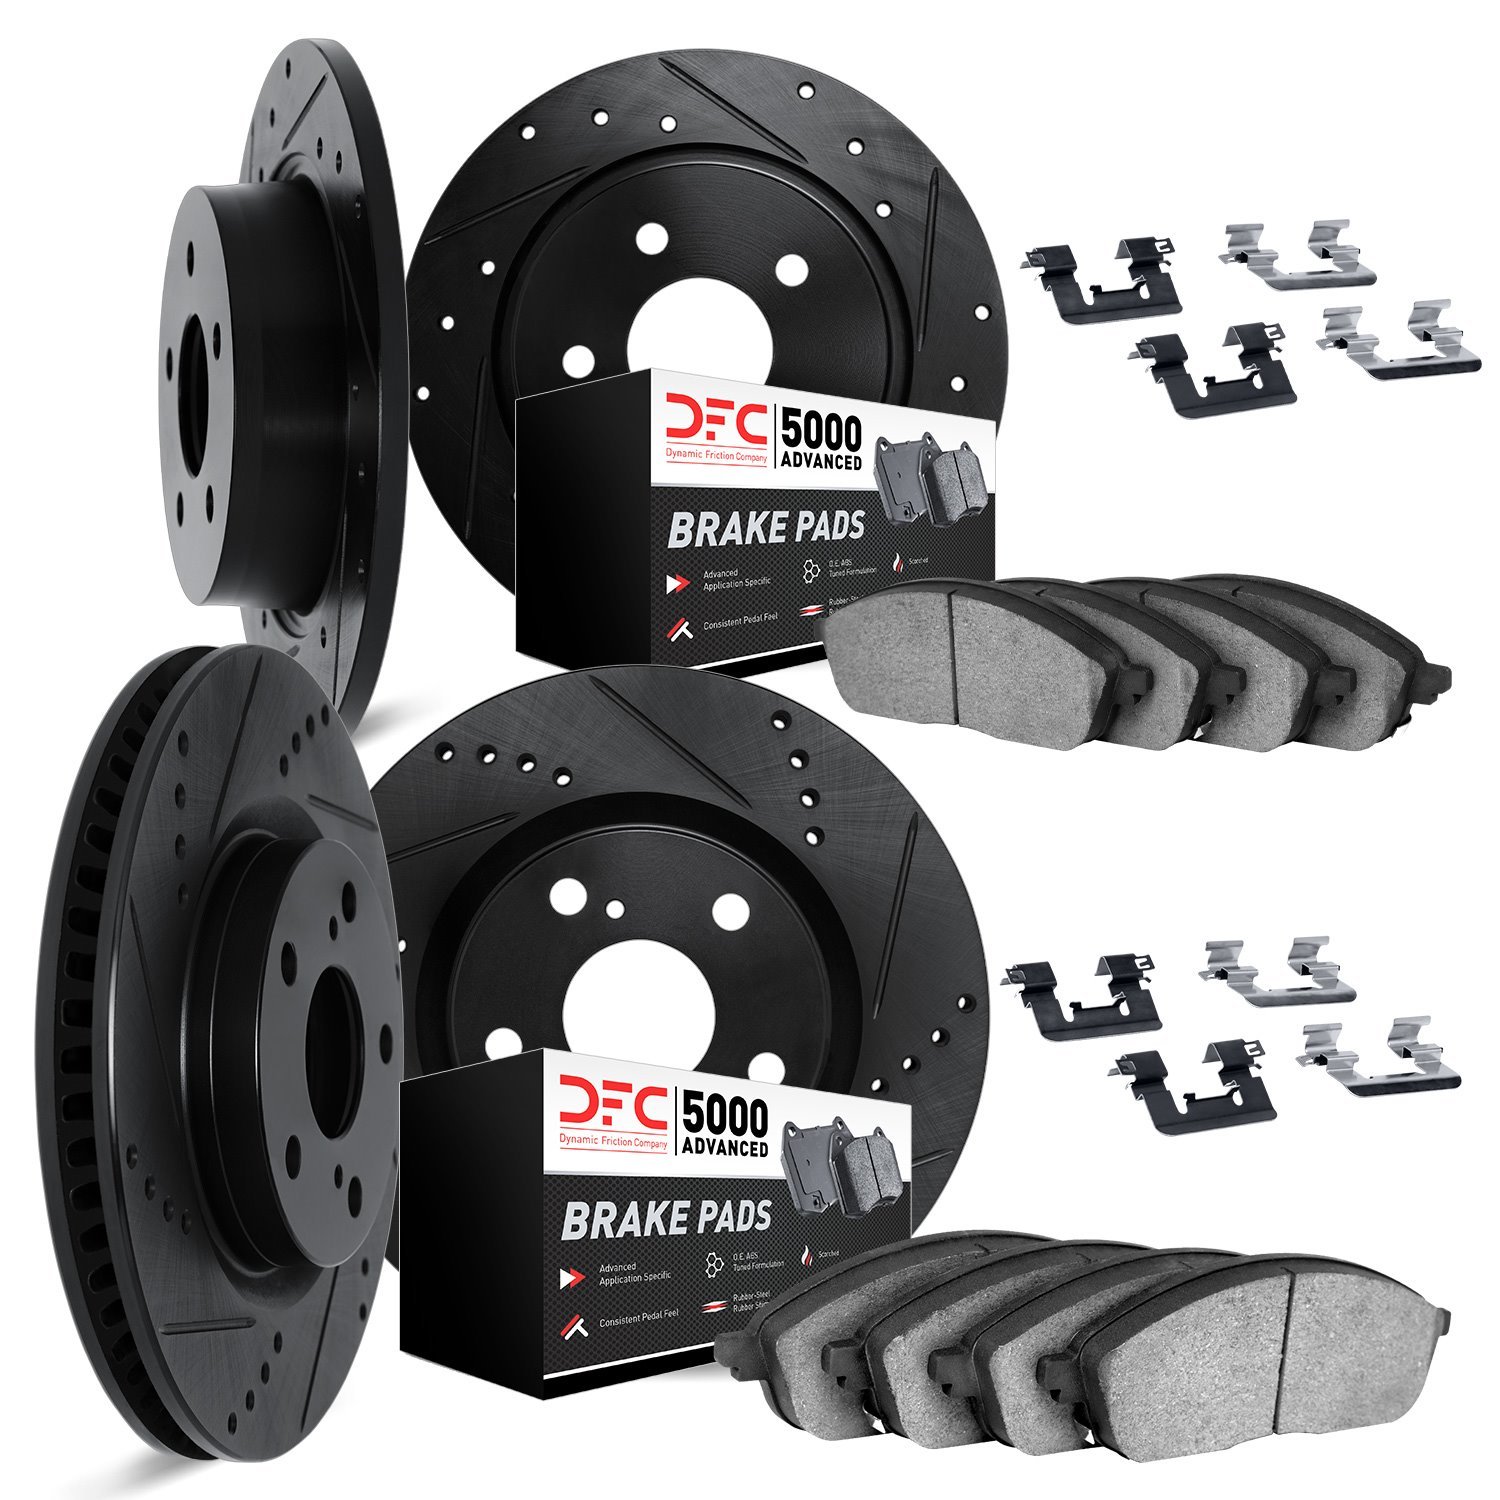 8514-03088 Drilled/Slotted Brake Rotors w/5000 Advanced Brake Pads Kit & Hardware [Black], Fits Select Kia/Hyundai/Genesis, Posi